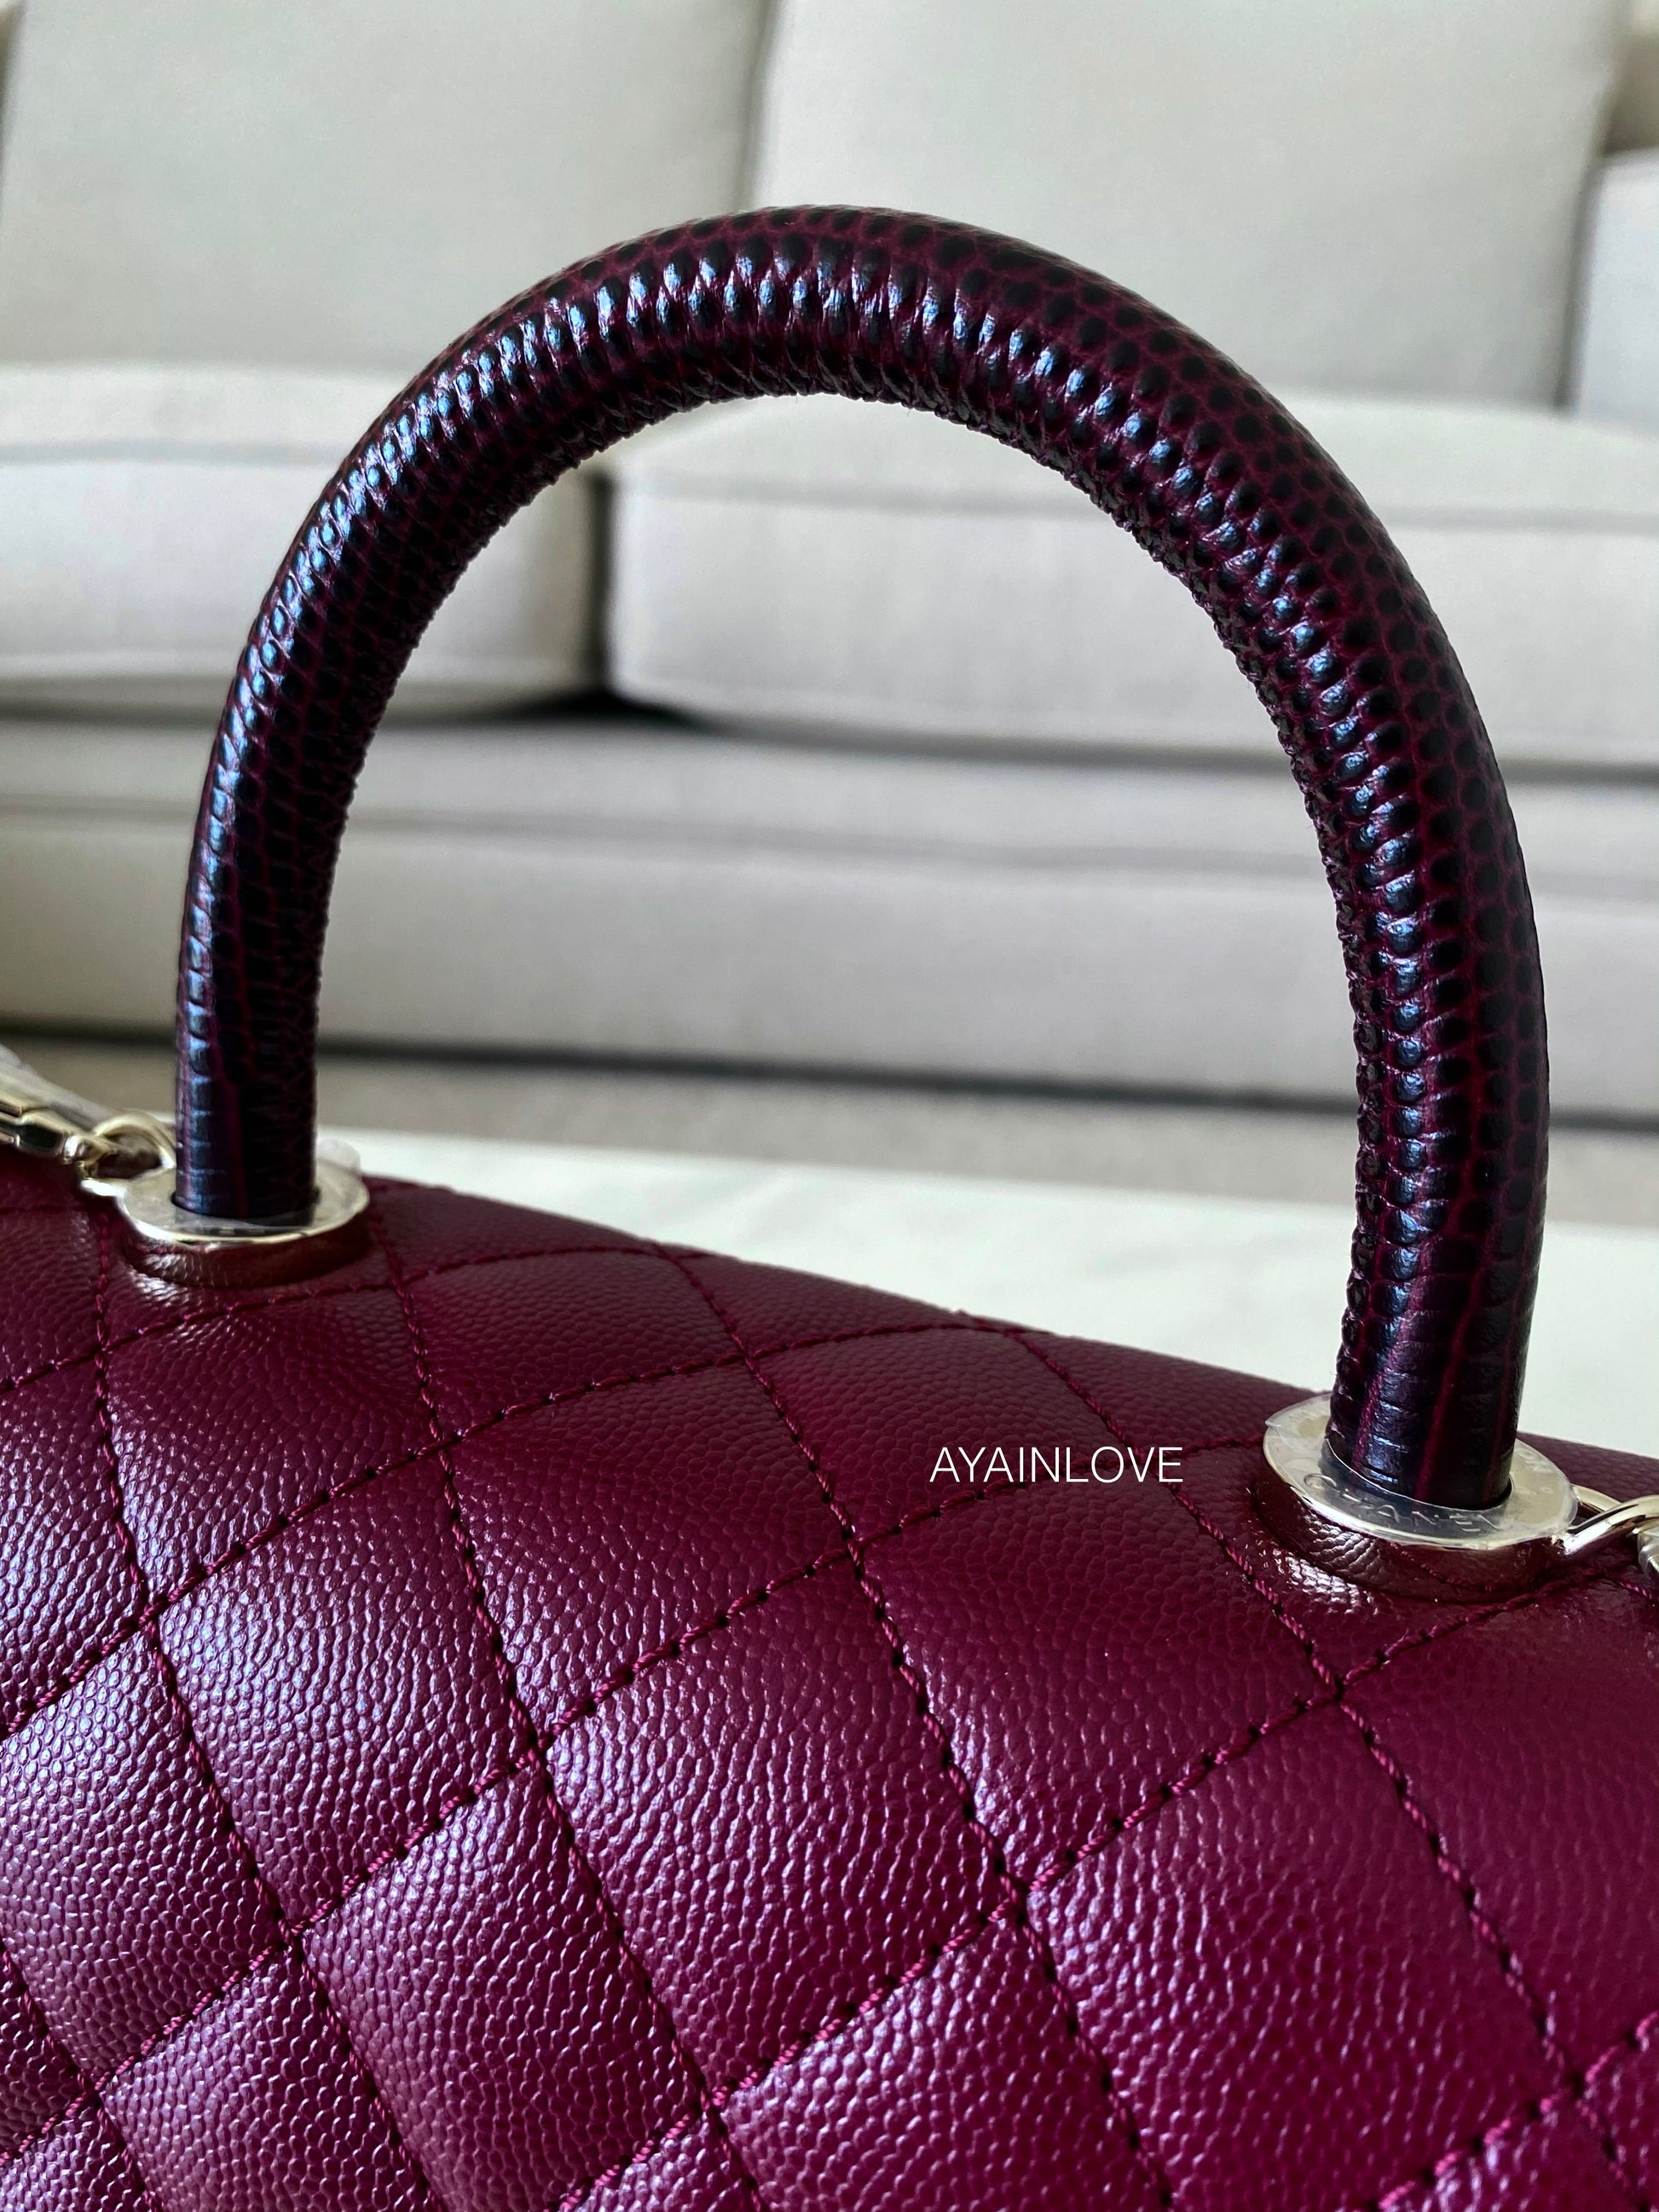 Chanel Beige/Maroon Caviar Leather and Lizard Medium Coco Top Handle Bag  Chanel